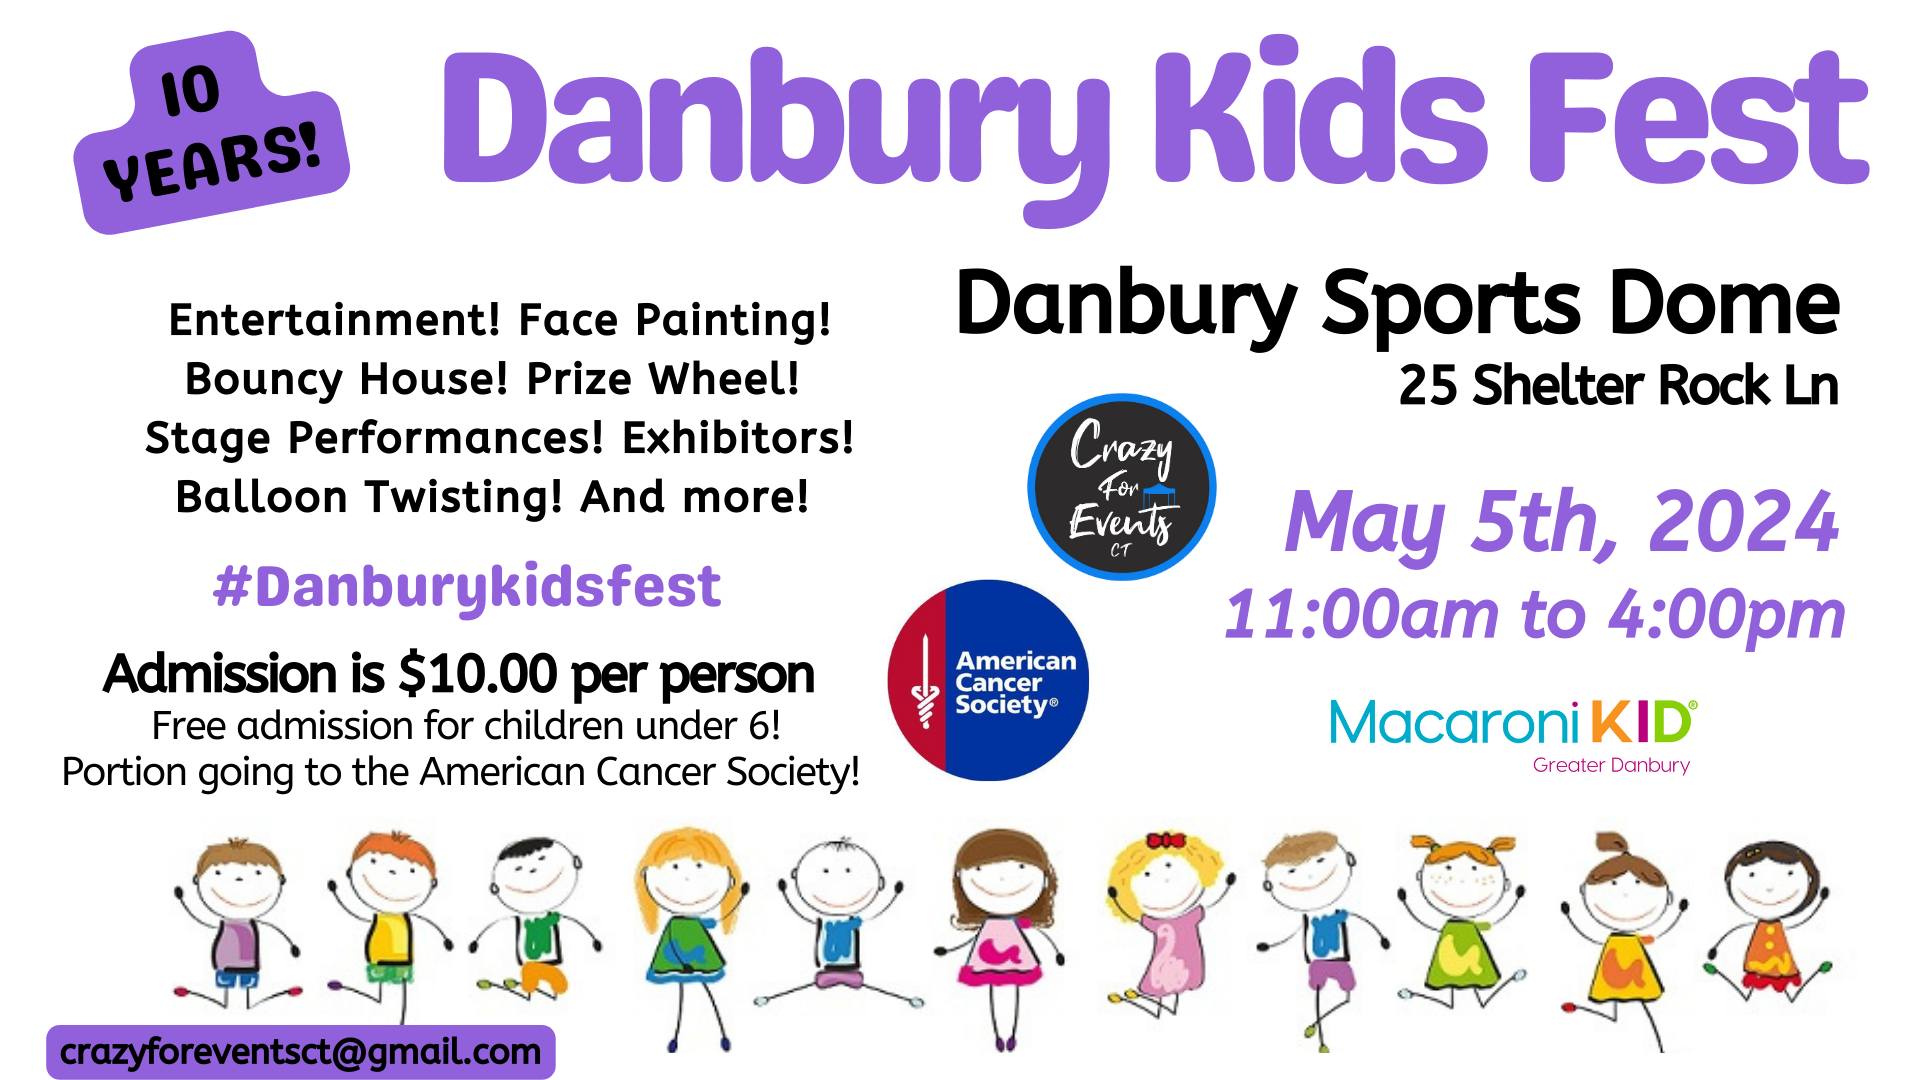 The Annual Danbury Kids Fest